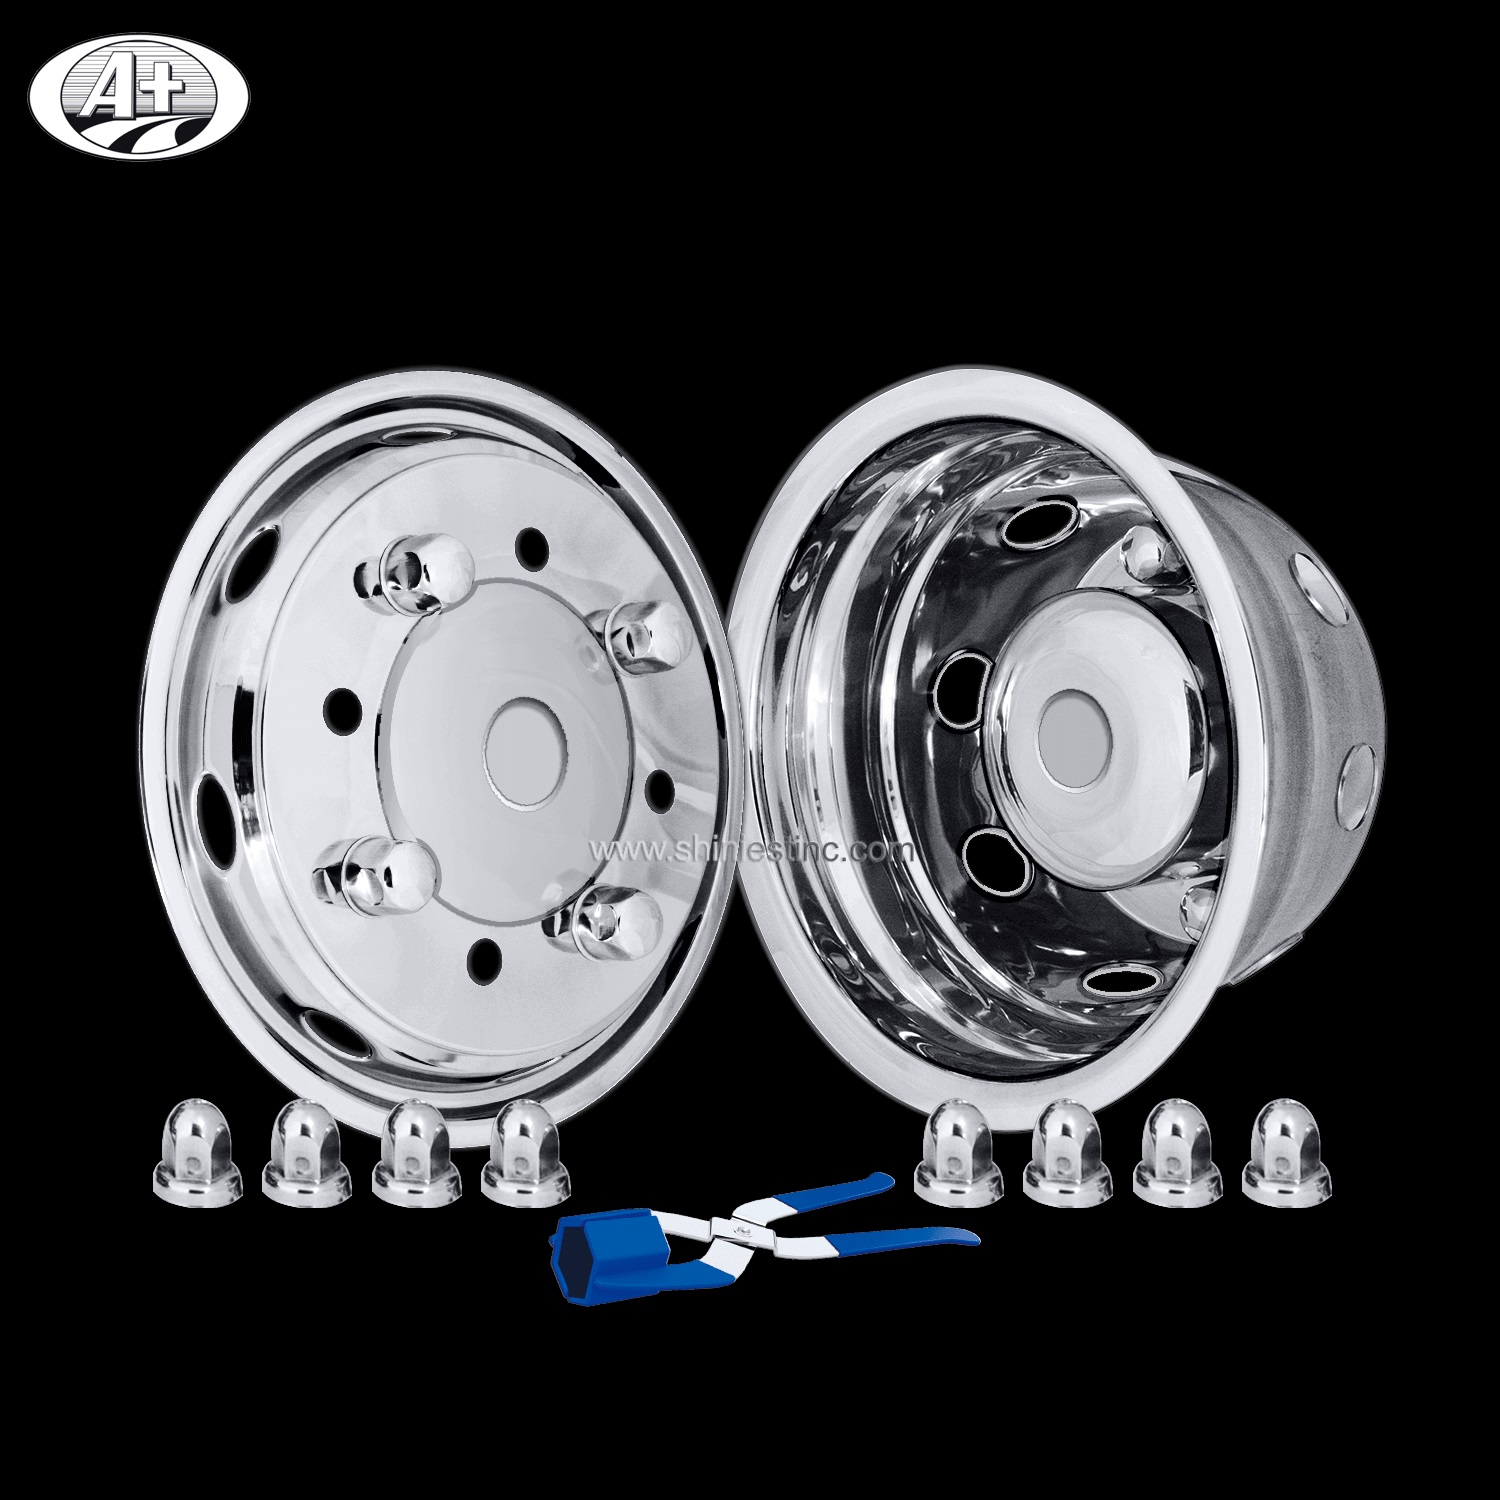 (E20195DW) T304 Stainless Steel Wheel Cover Set for 19.5＂x 8.25＂Wheel